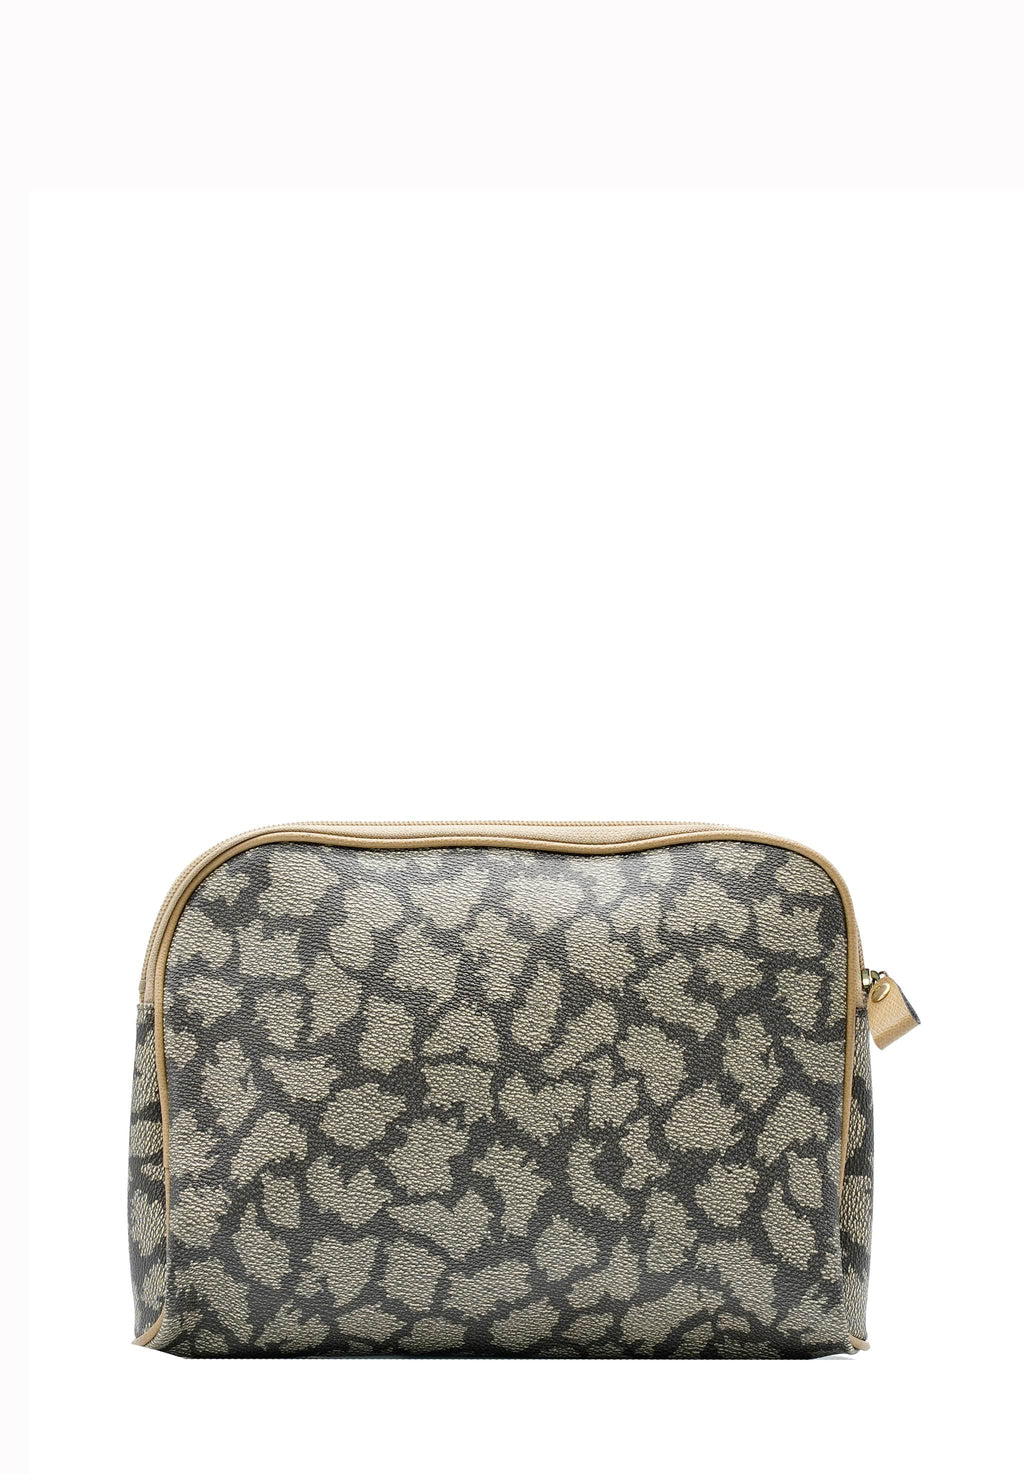 Saint Laurent Clutches & Clutch Bags for Women | Neiman Marcus